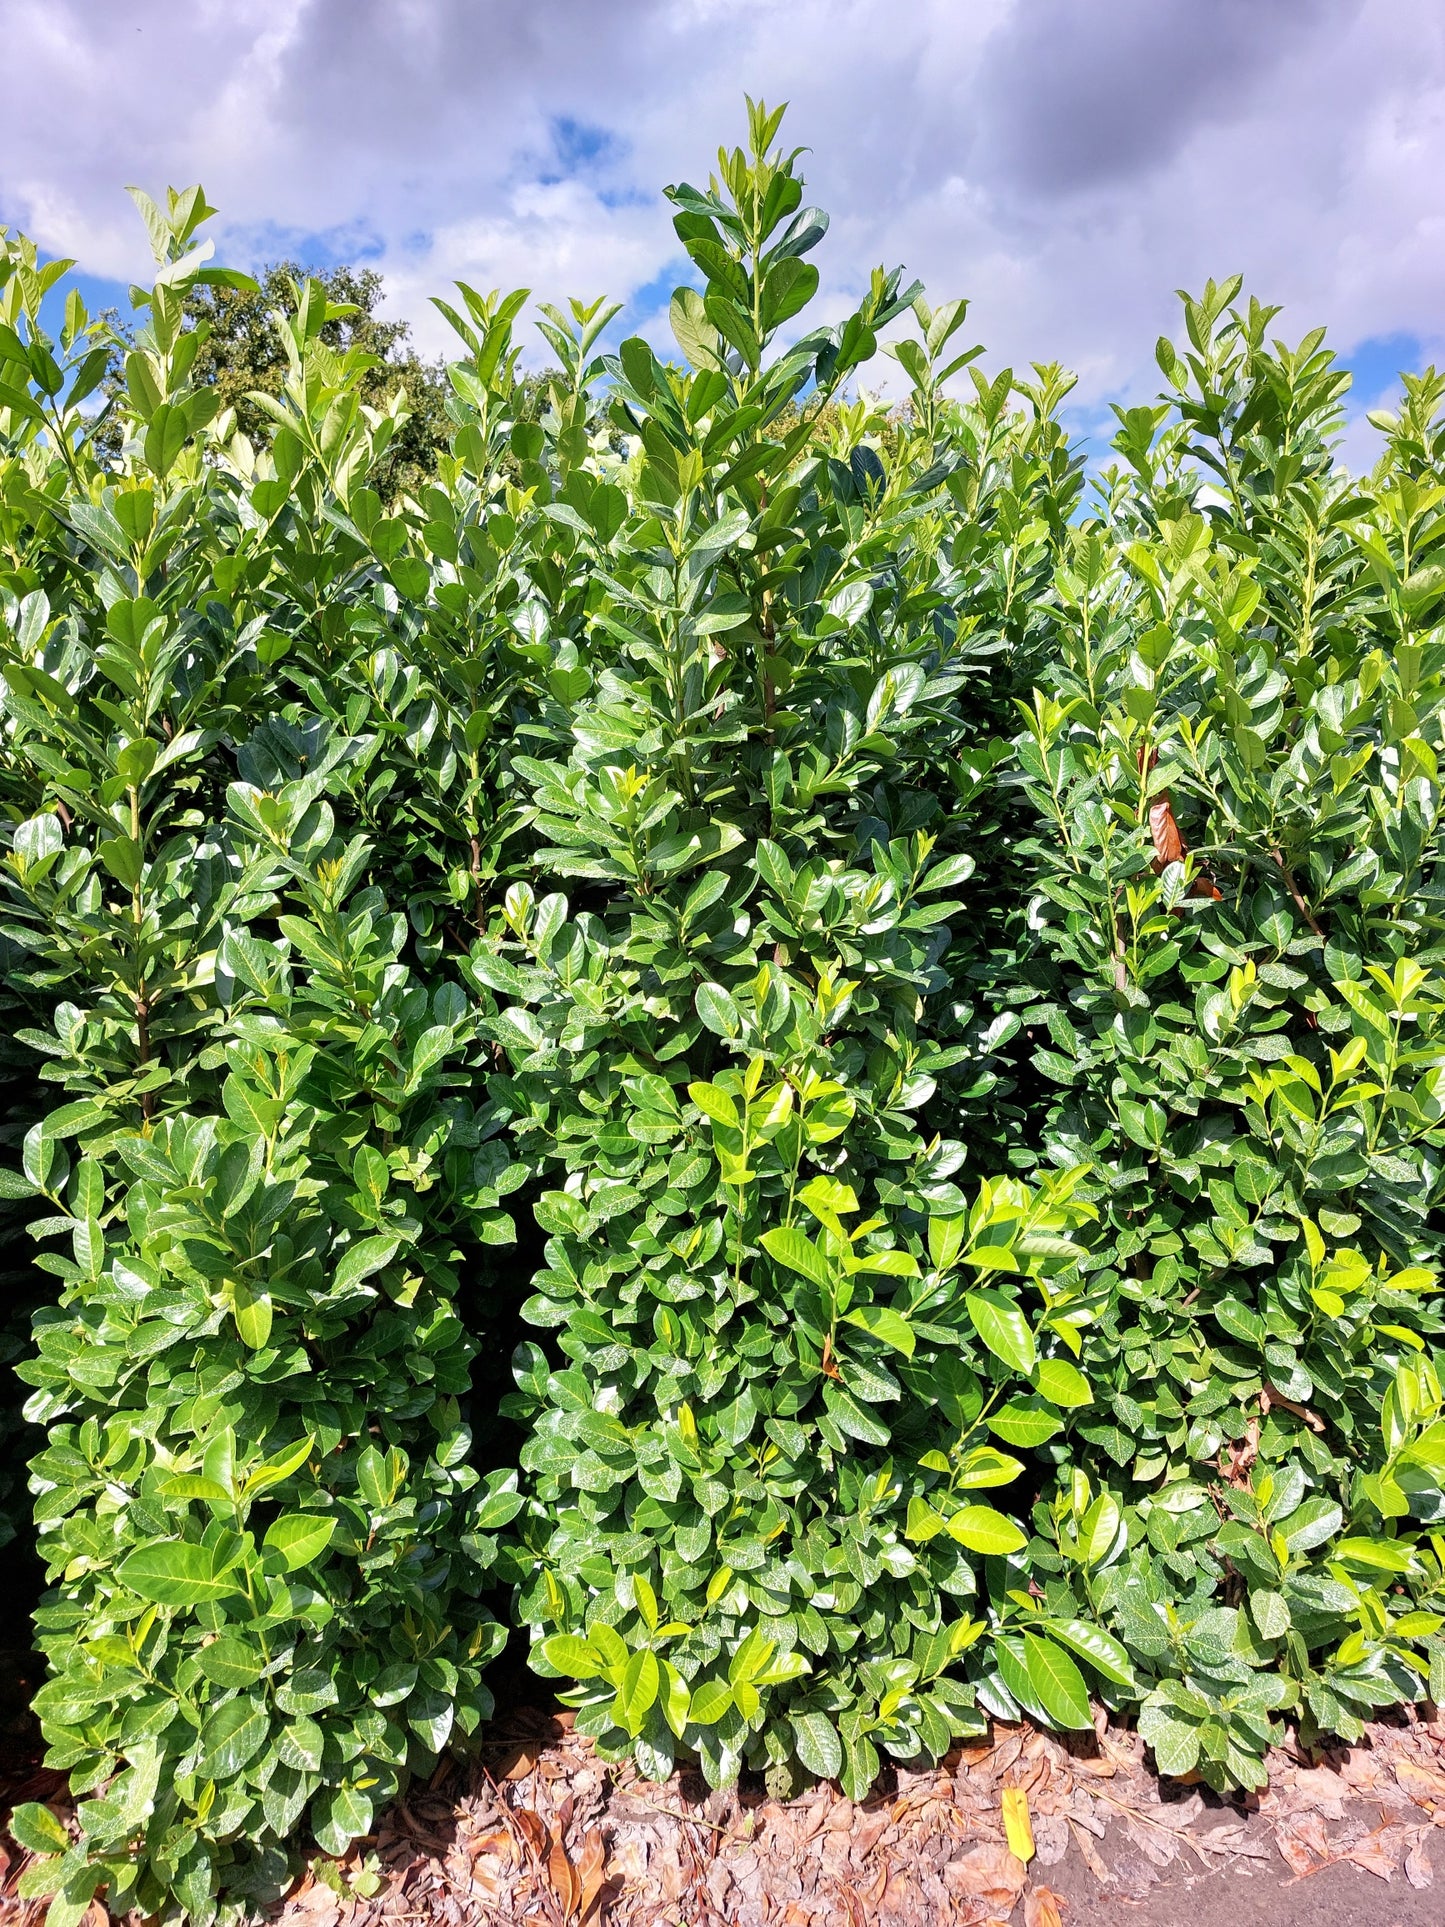 Prunus laurocerasus 'Rotundifolia' (English Cherry Laurel) - Hedging